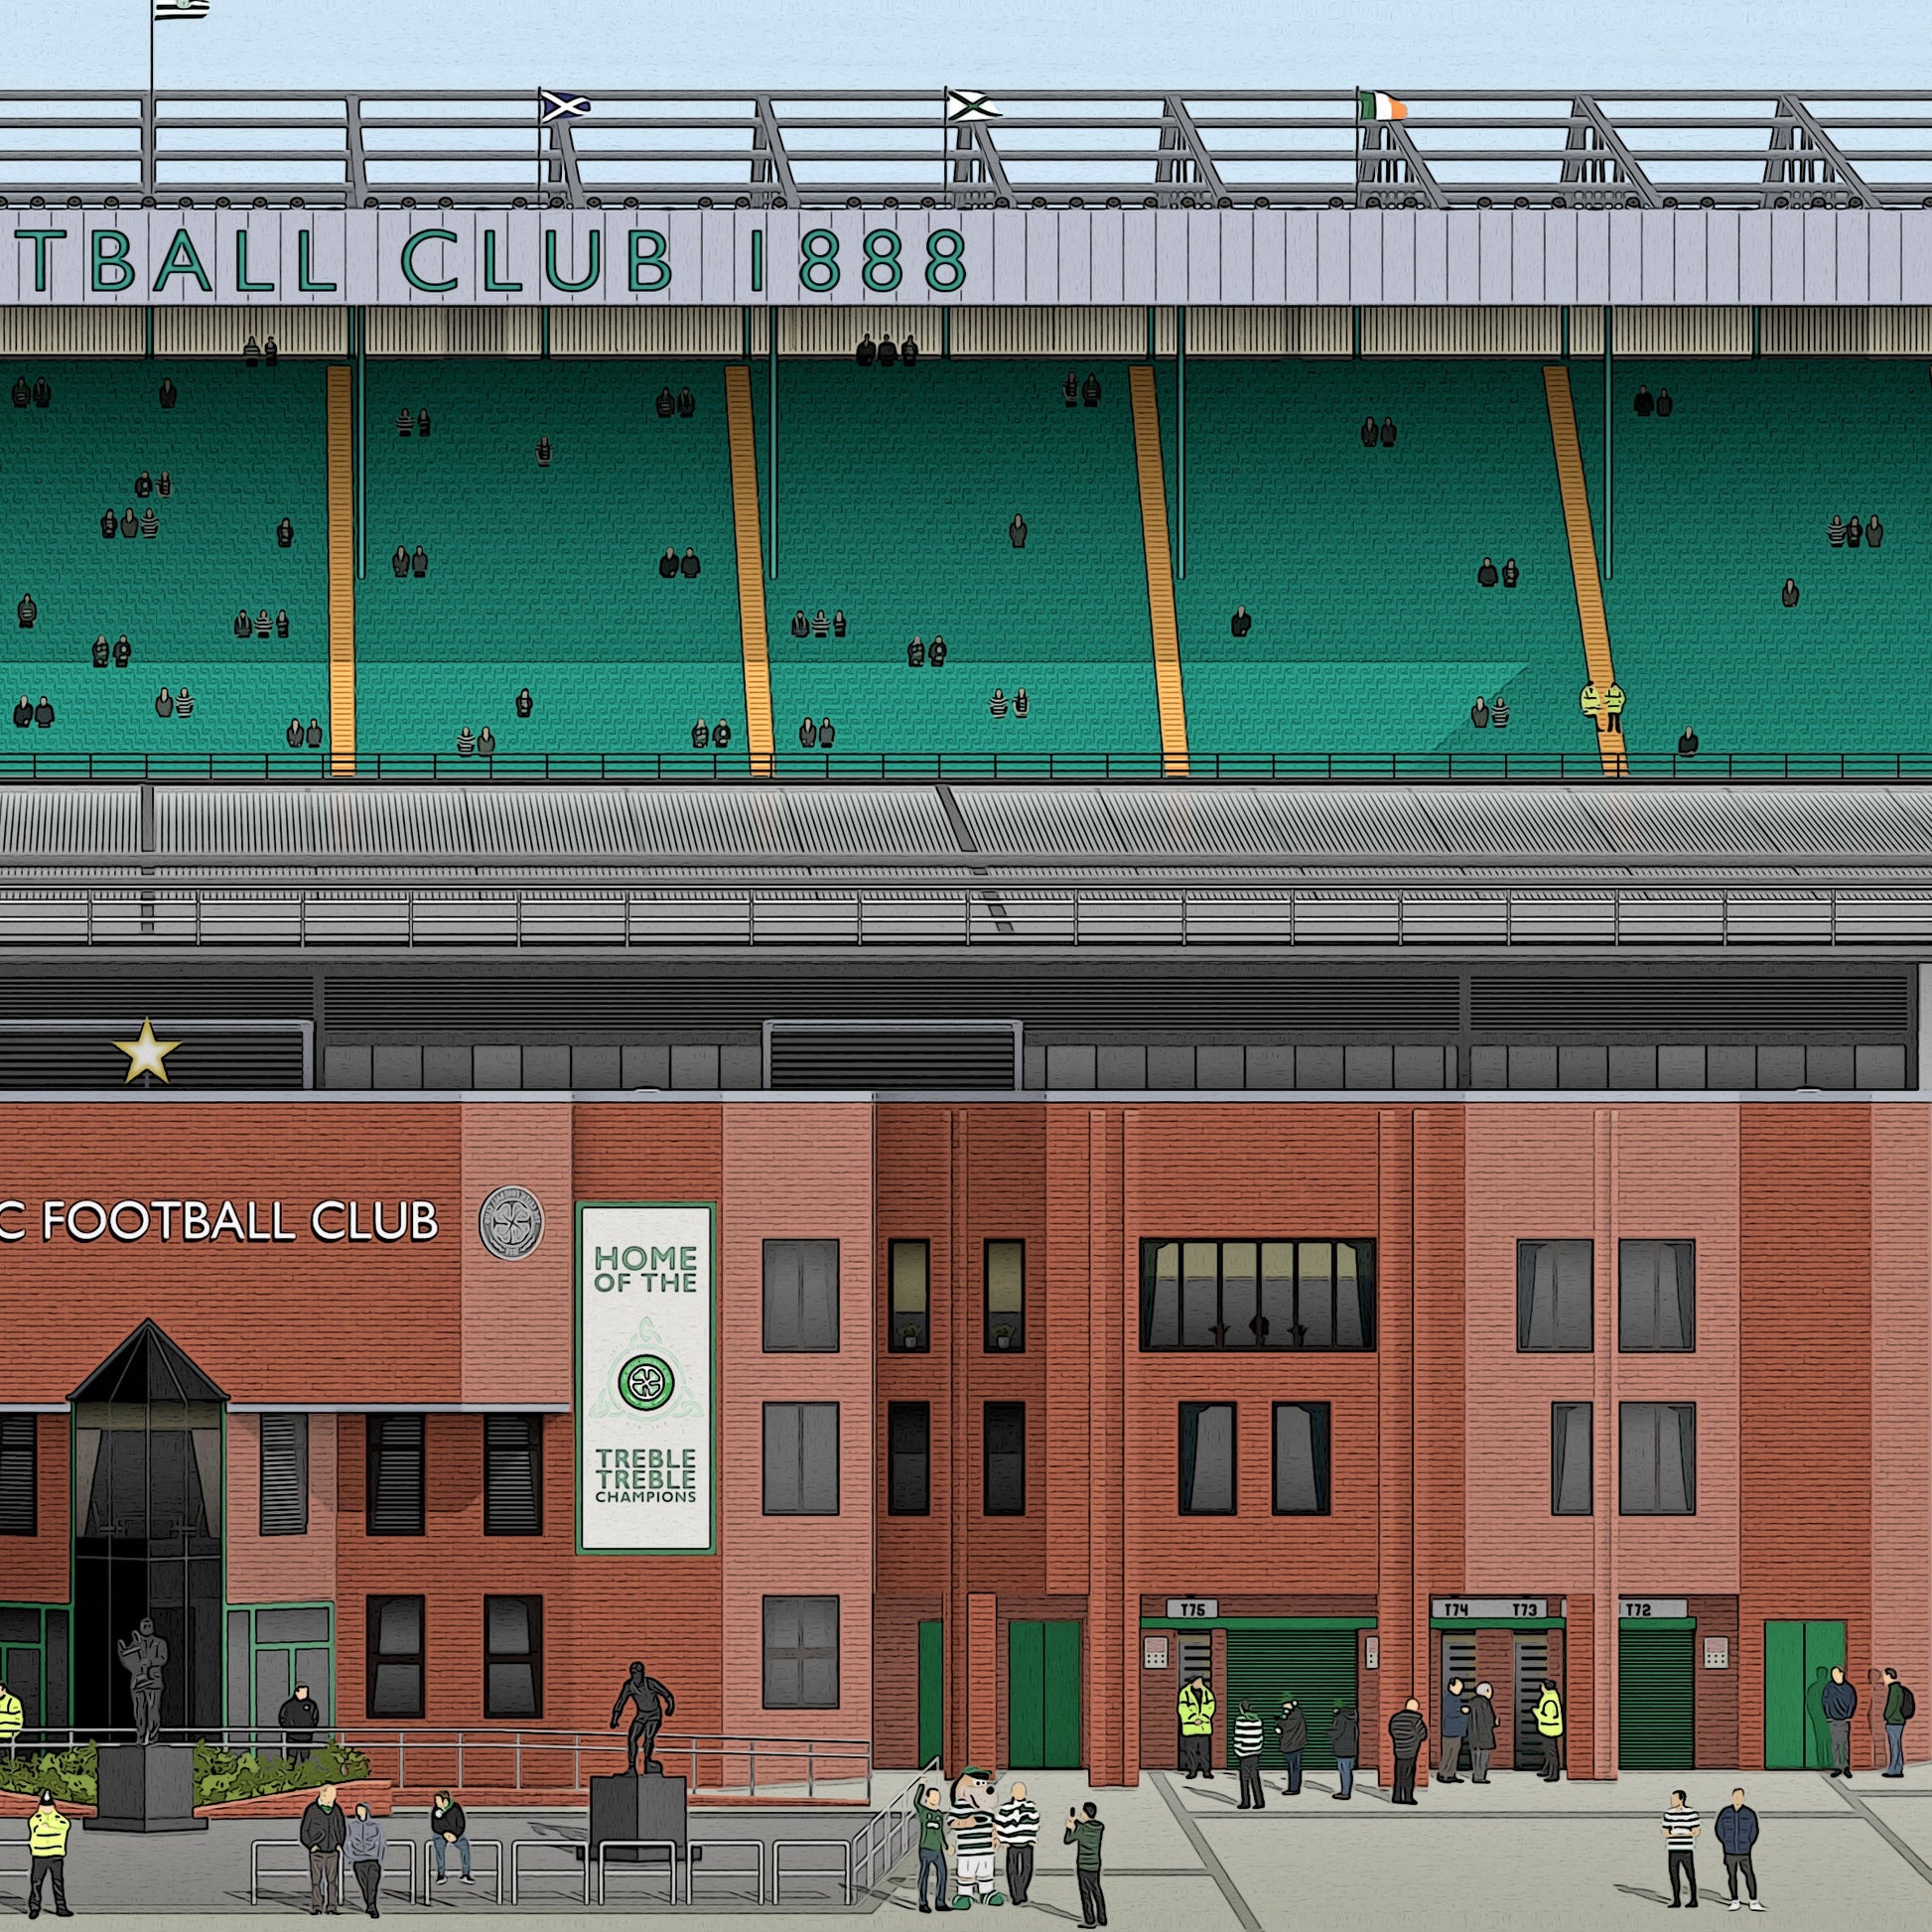 Celtic Park Stadium Art - North Section